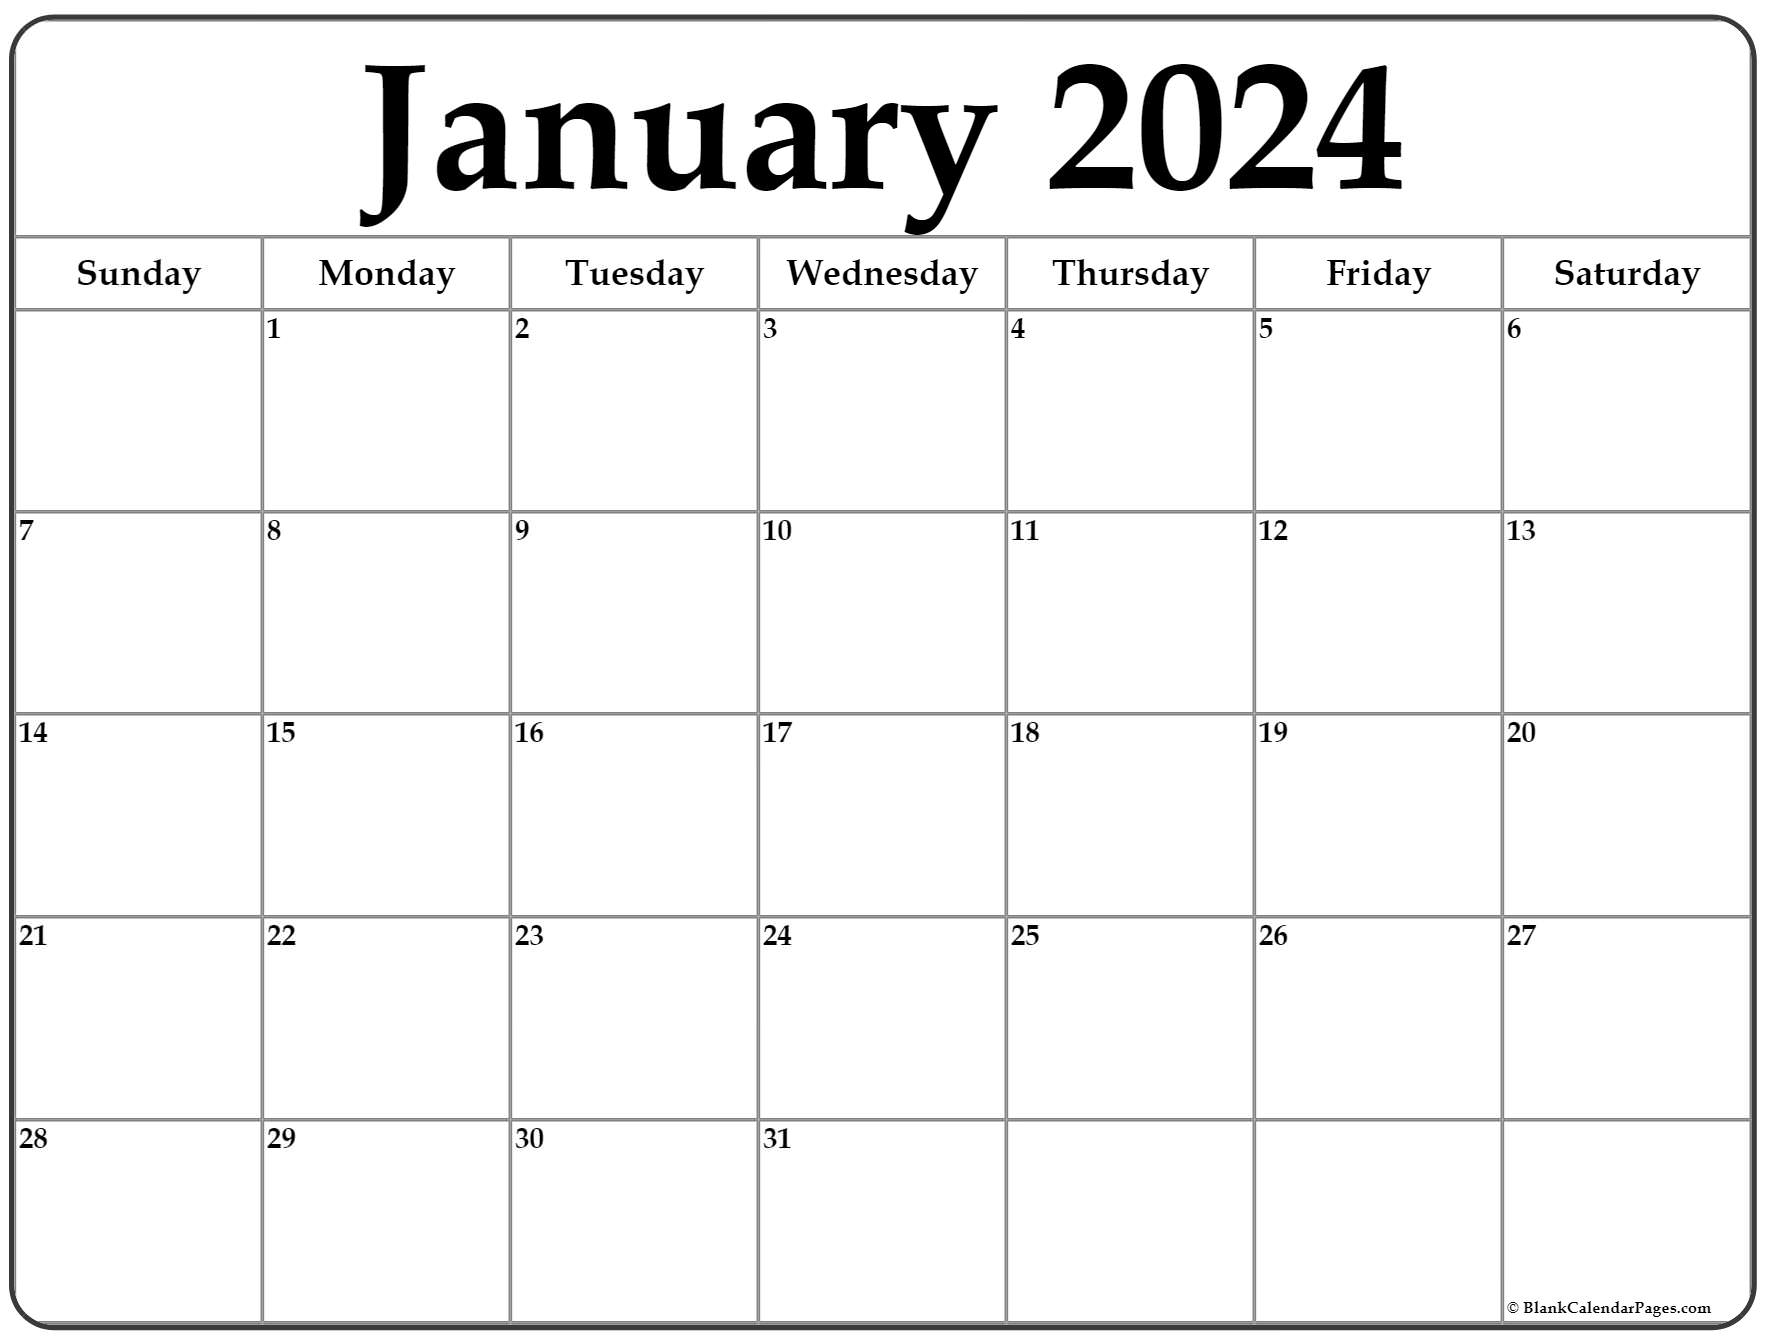 January 2024 Calendar | Free Printable Calendar for Free Monthly Printable Calendar 2024